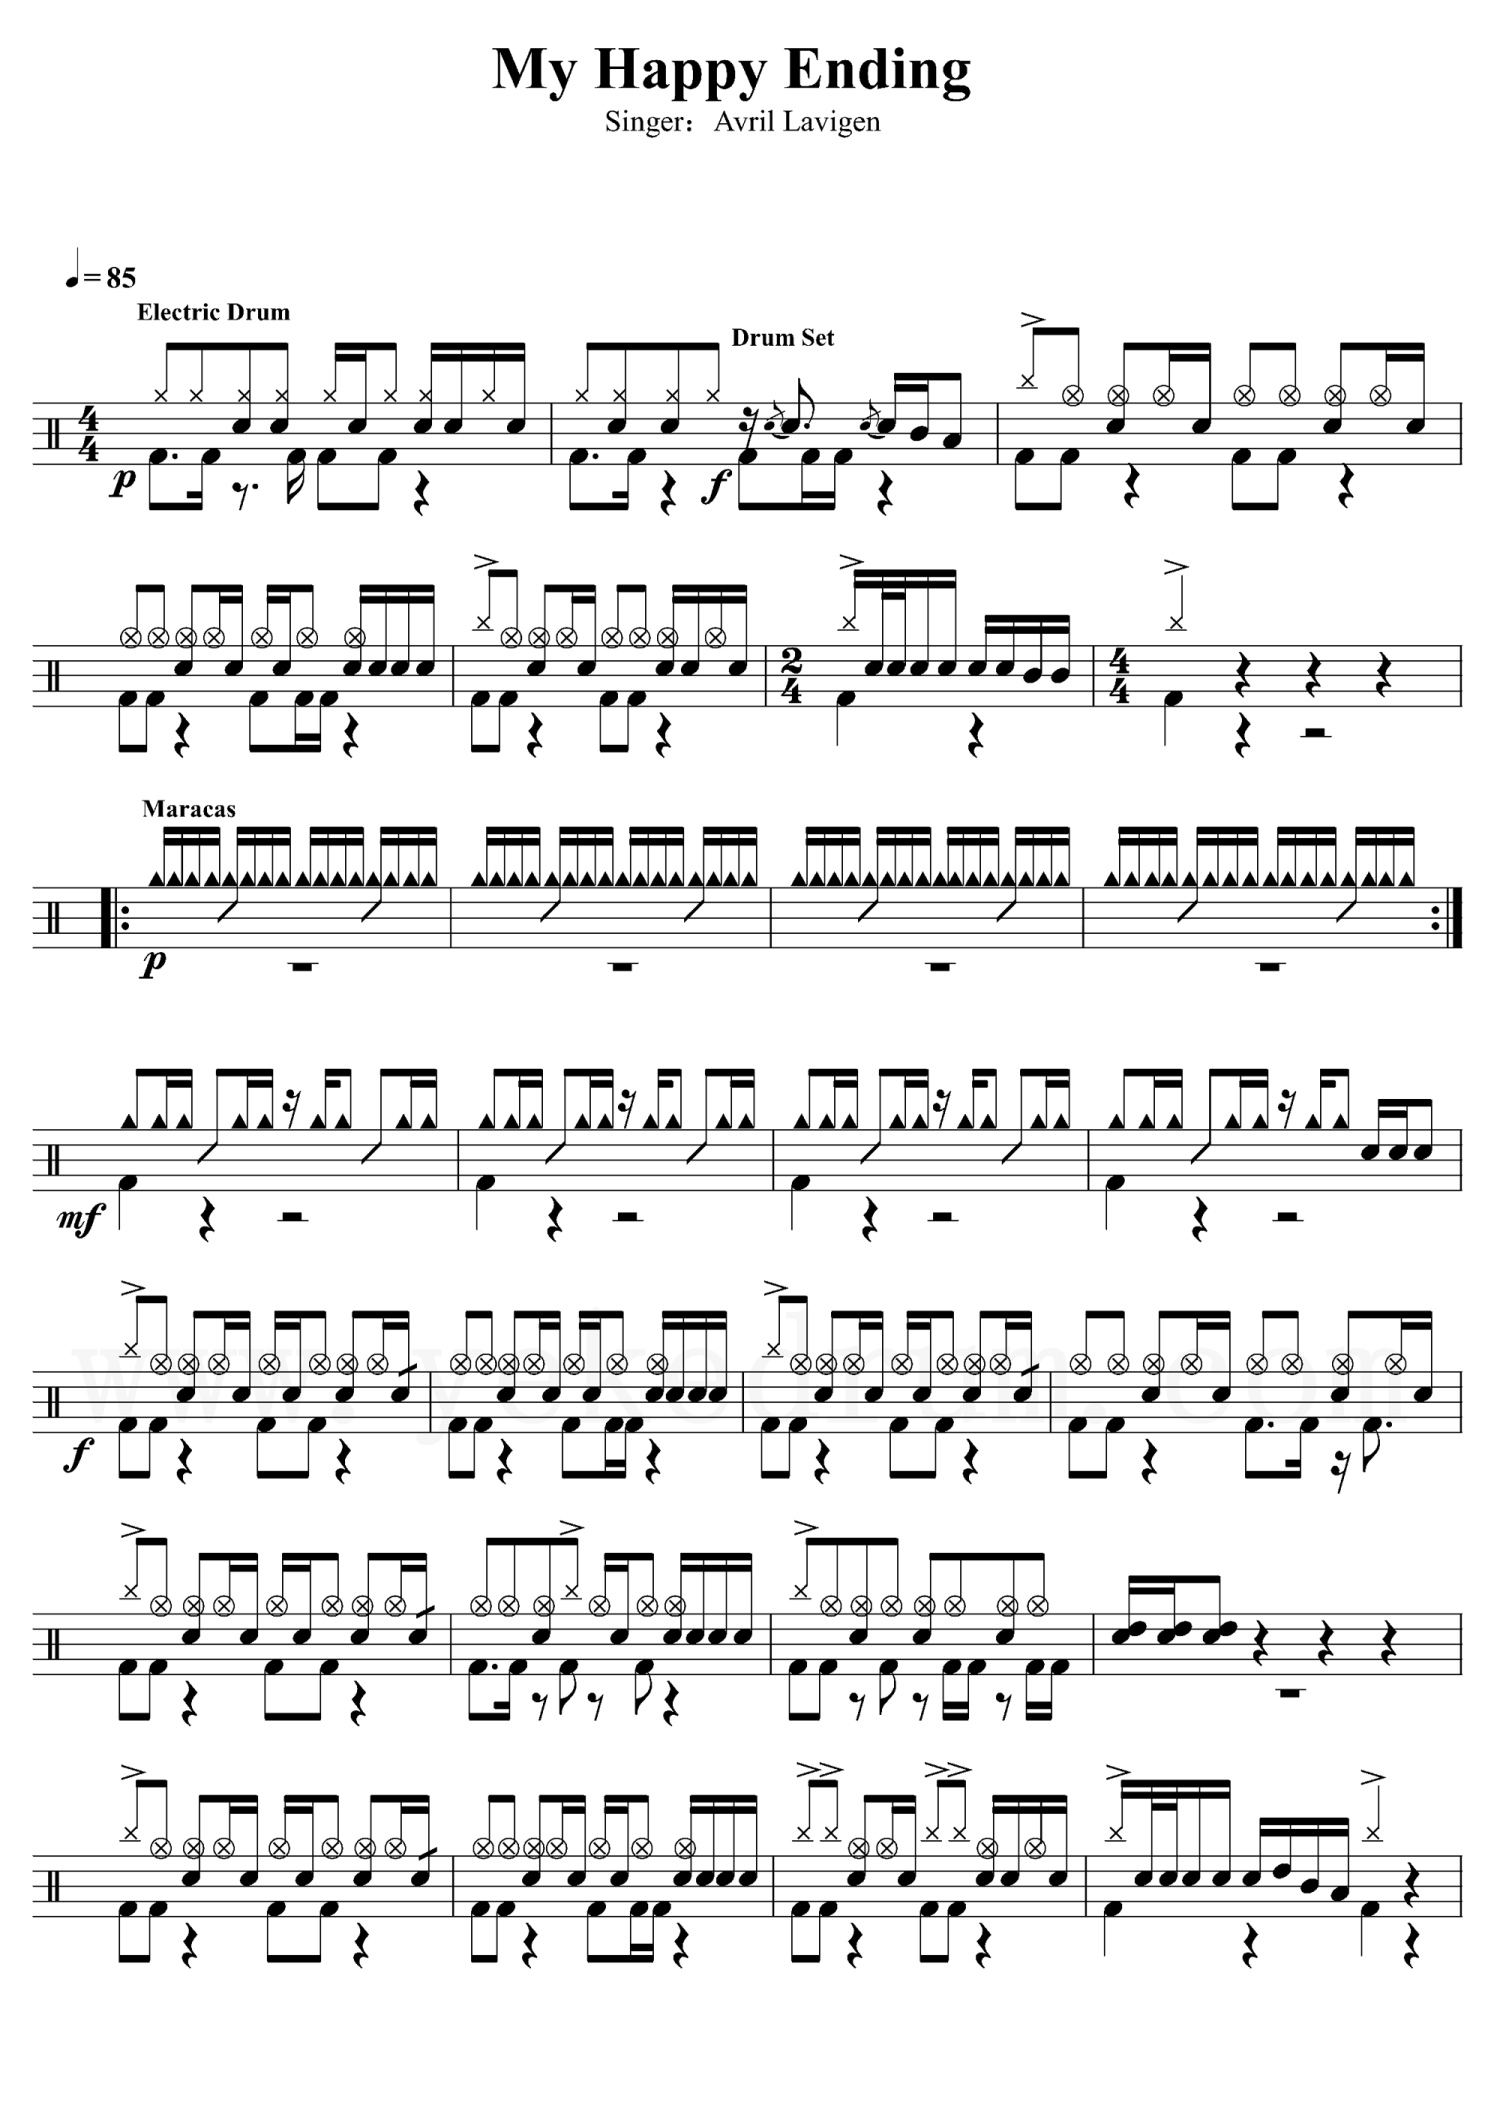 Avril Lavigne-My Happy Ending Sheet Music pdf, - Free Score Download ★